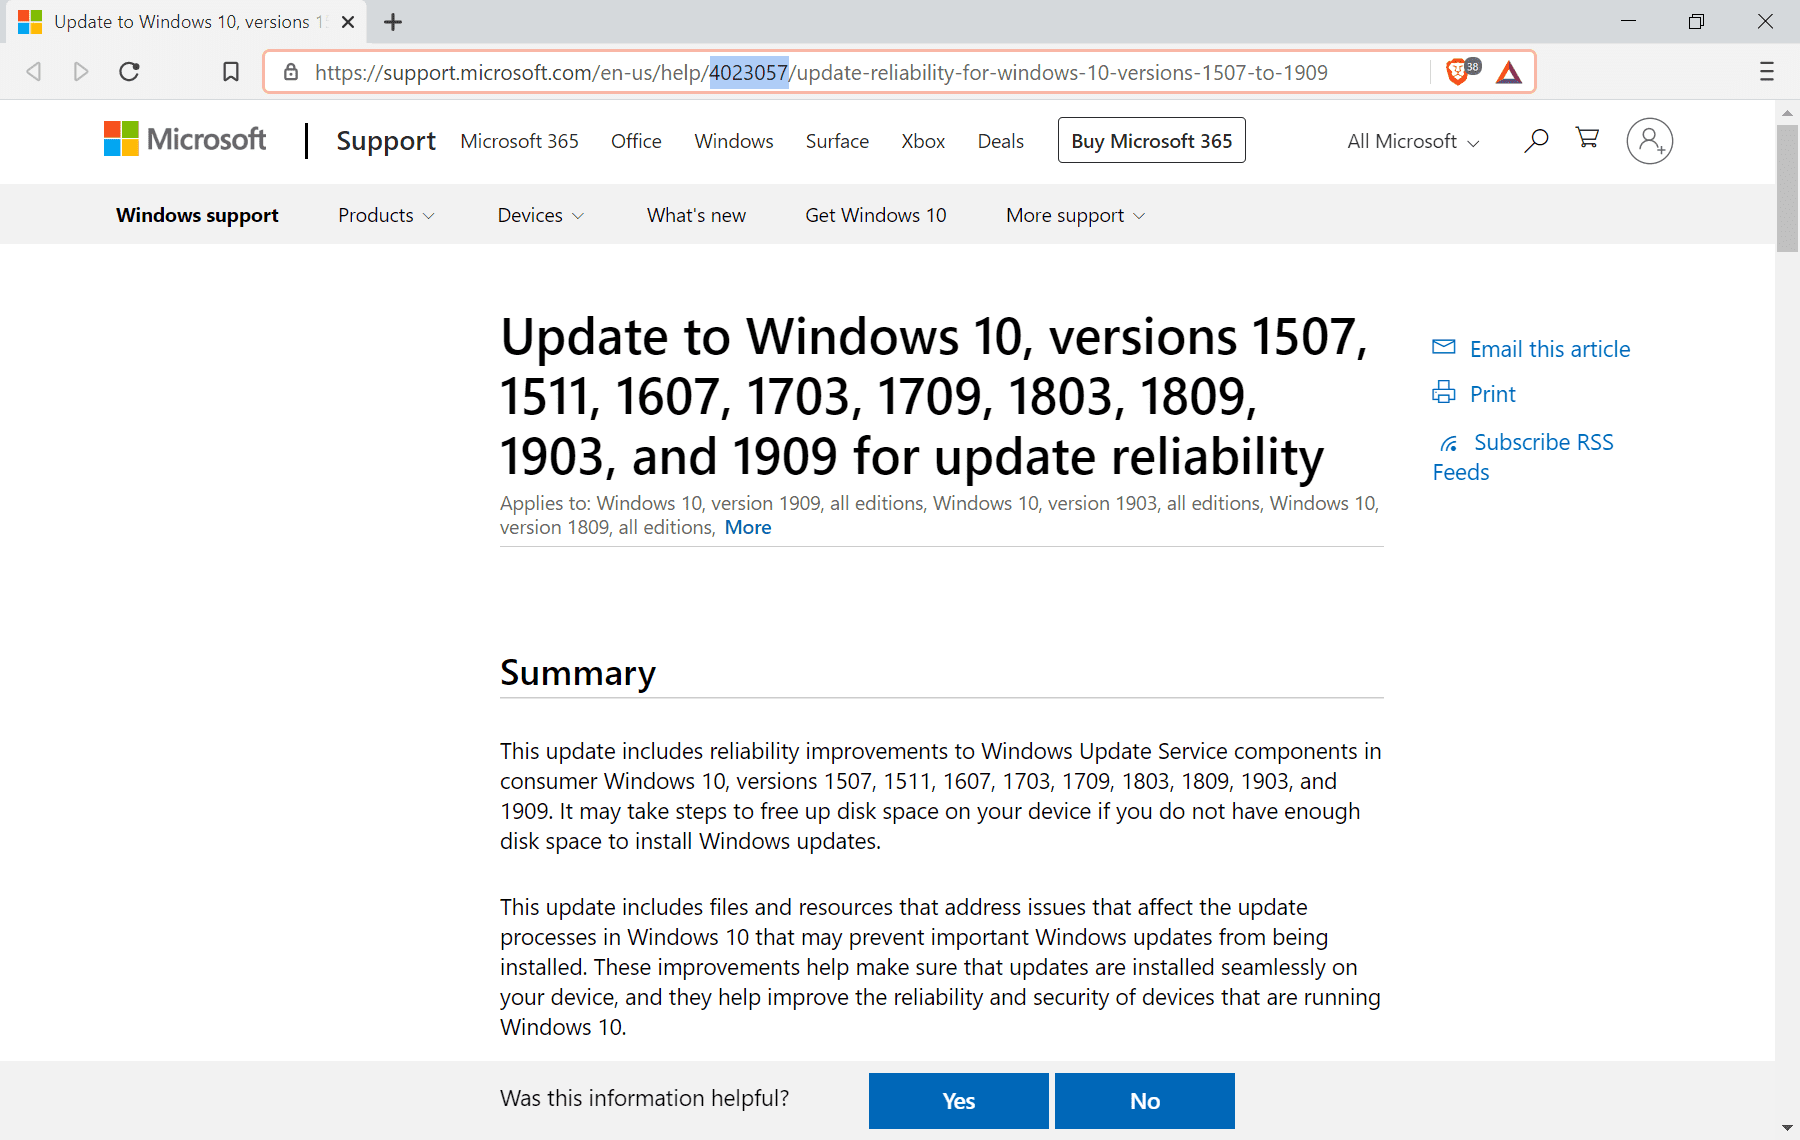 Microsoft pusht KB4023057 opnieuw om af te dwingen Windows 10 upgrades